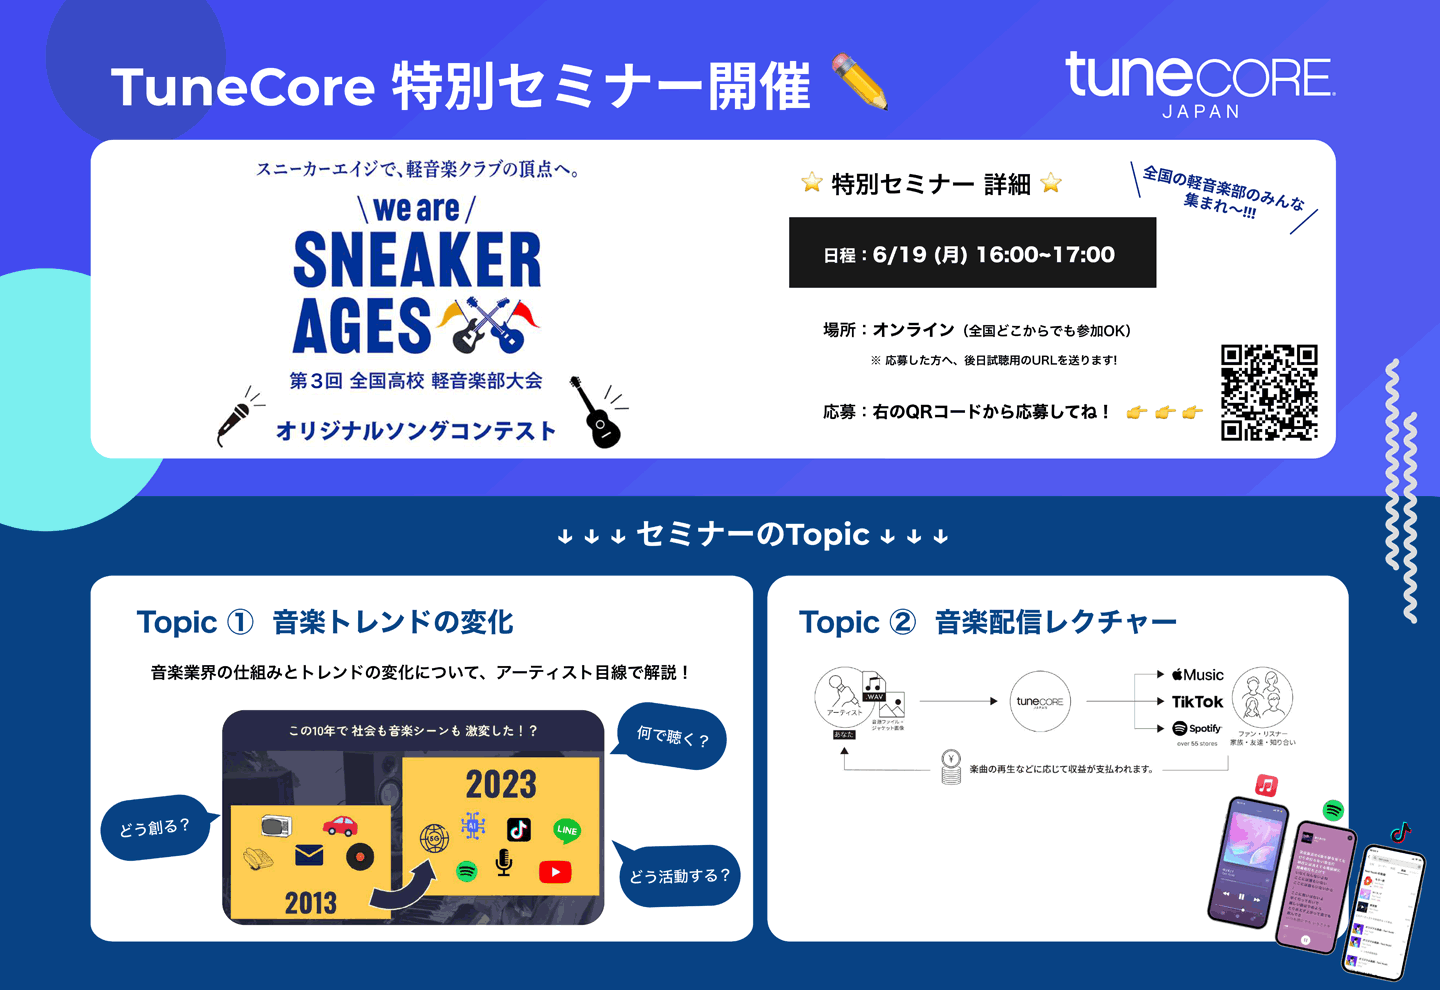 TuneCore Japan 特別セミナー開催